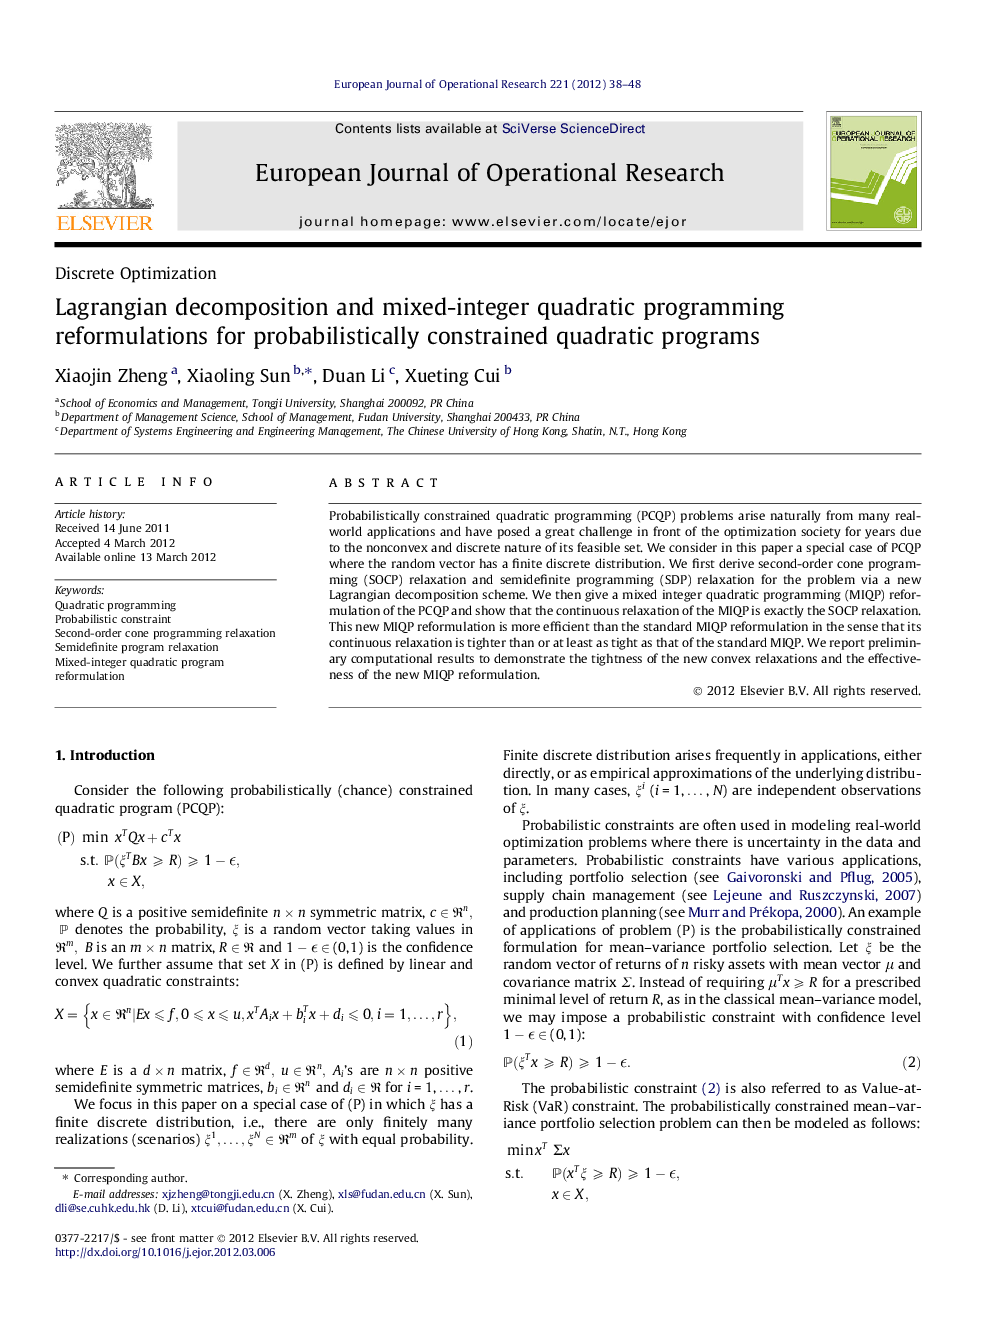 Lagrangian decomposition and mixed-integer quadratic programming reformulations for probabilistically constrained quadratic programs